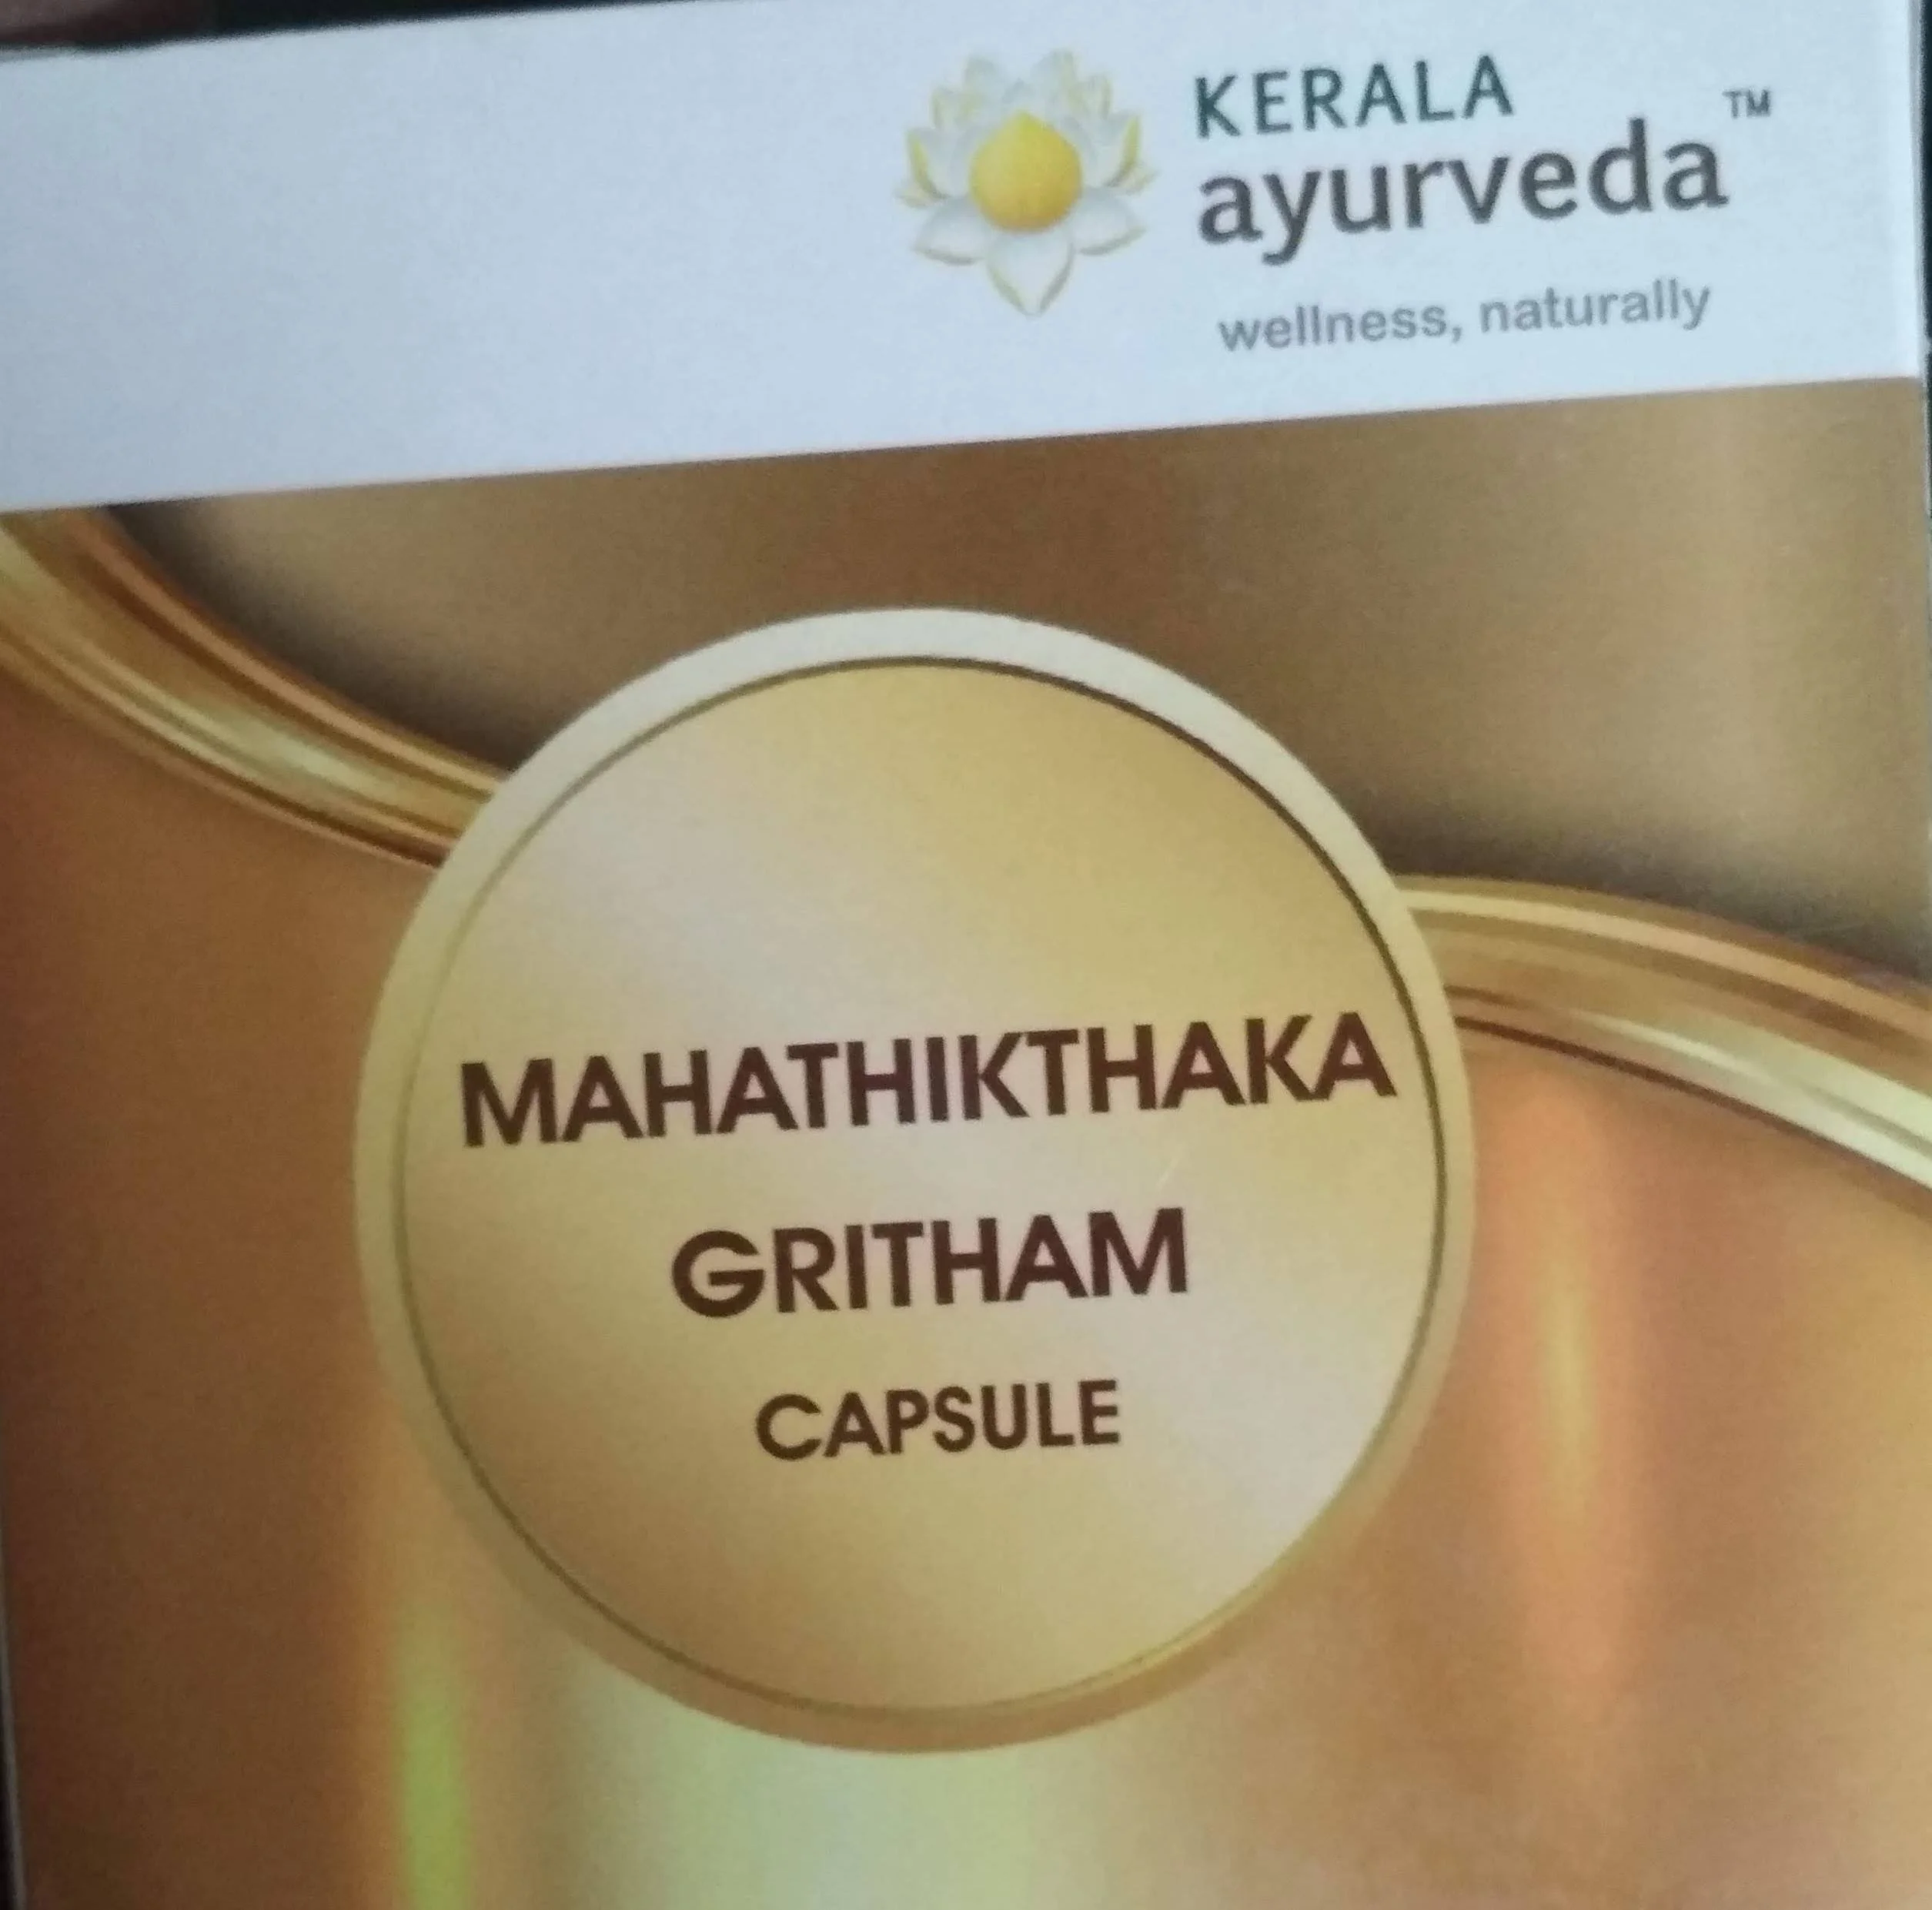 Mahathikthaka Gritham Capsule 100cap upto 20% off free shipping Kerala Ayurveda Ltd